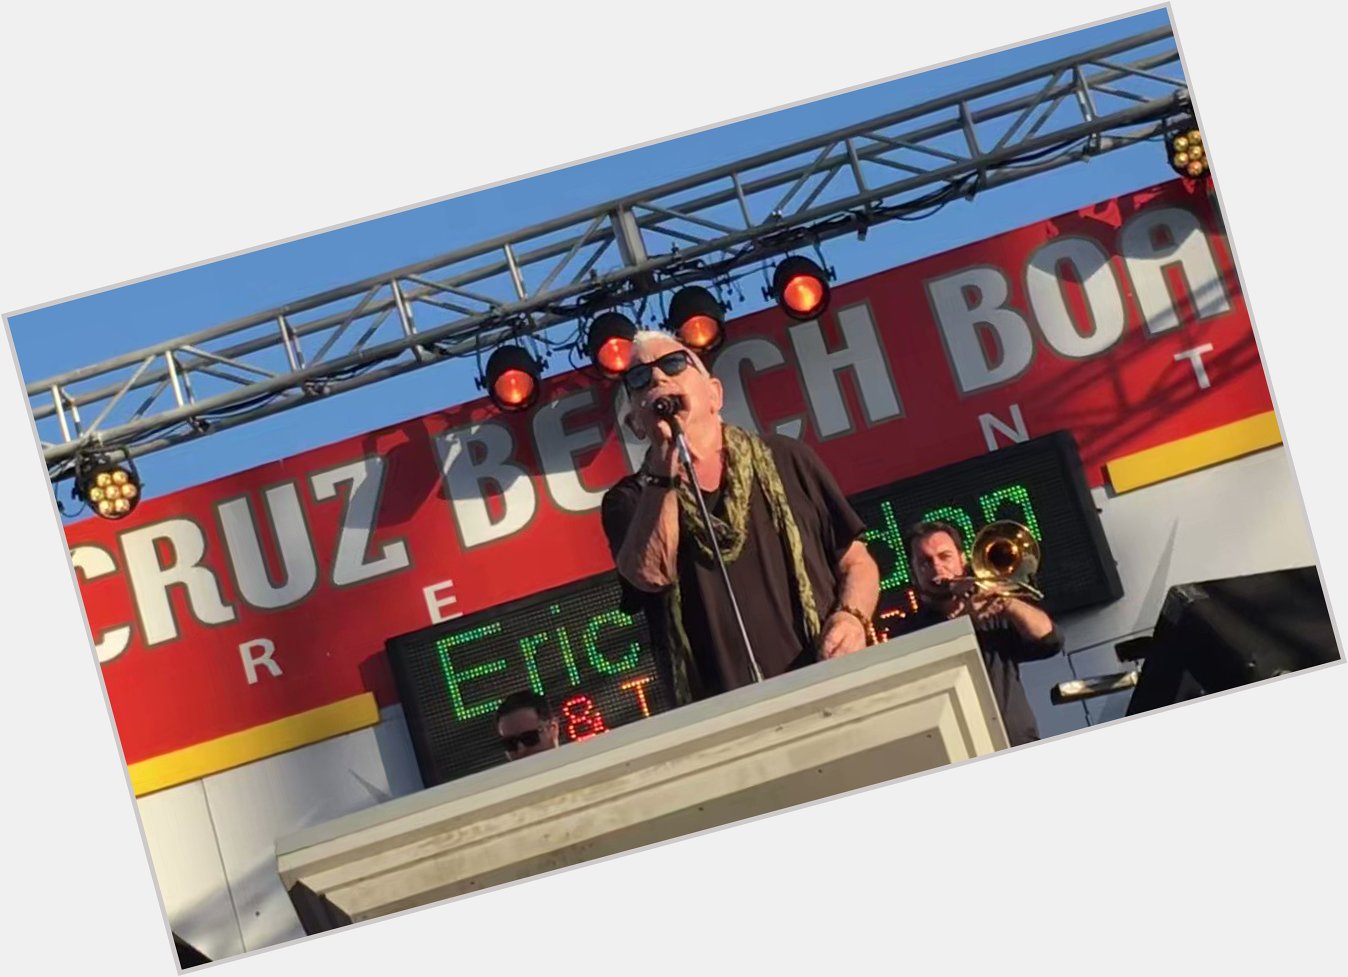 Wishing Eric Burdon a Happy 82nd Birthday! EB performing at The Boardwalk in Santa Cruz on July 21, 2017. 